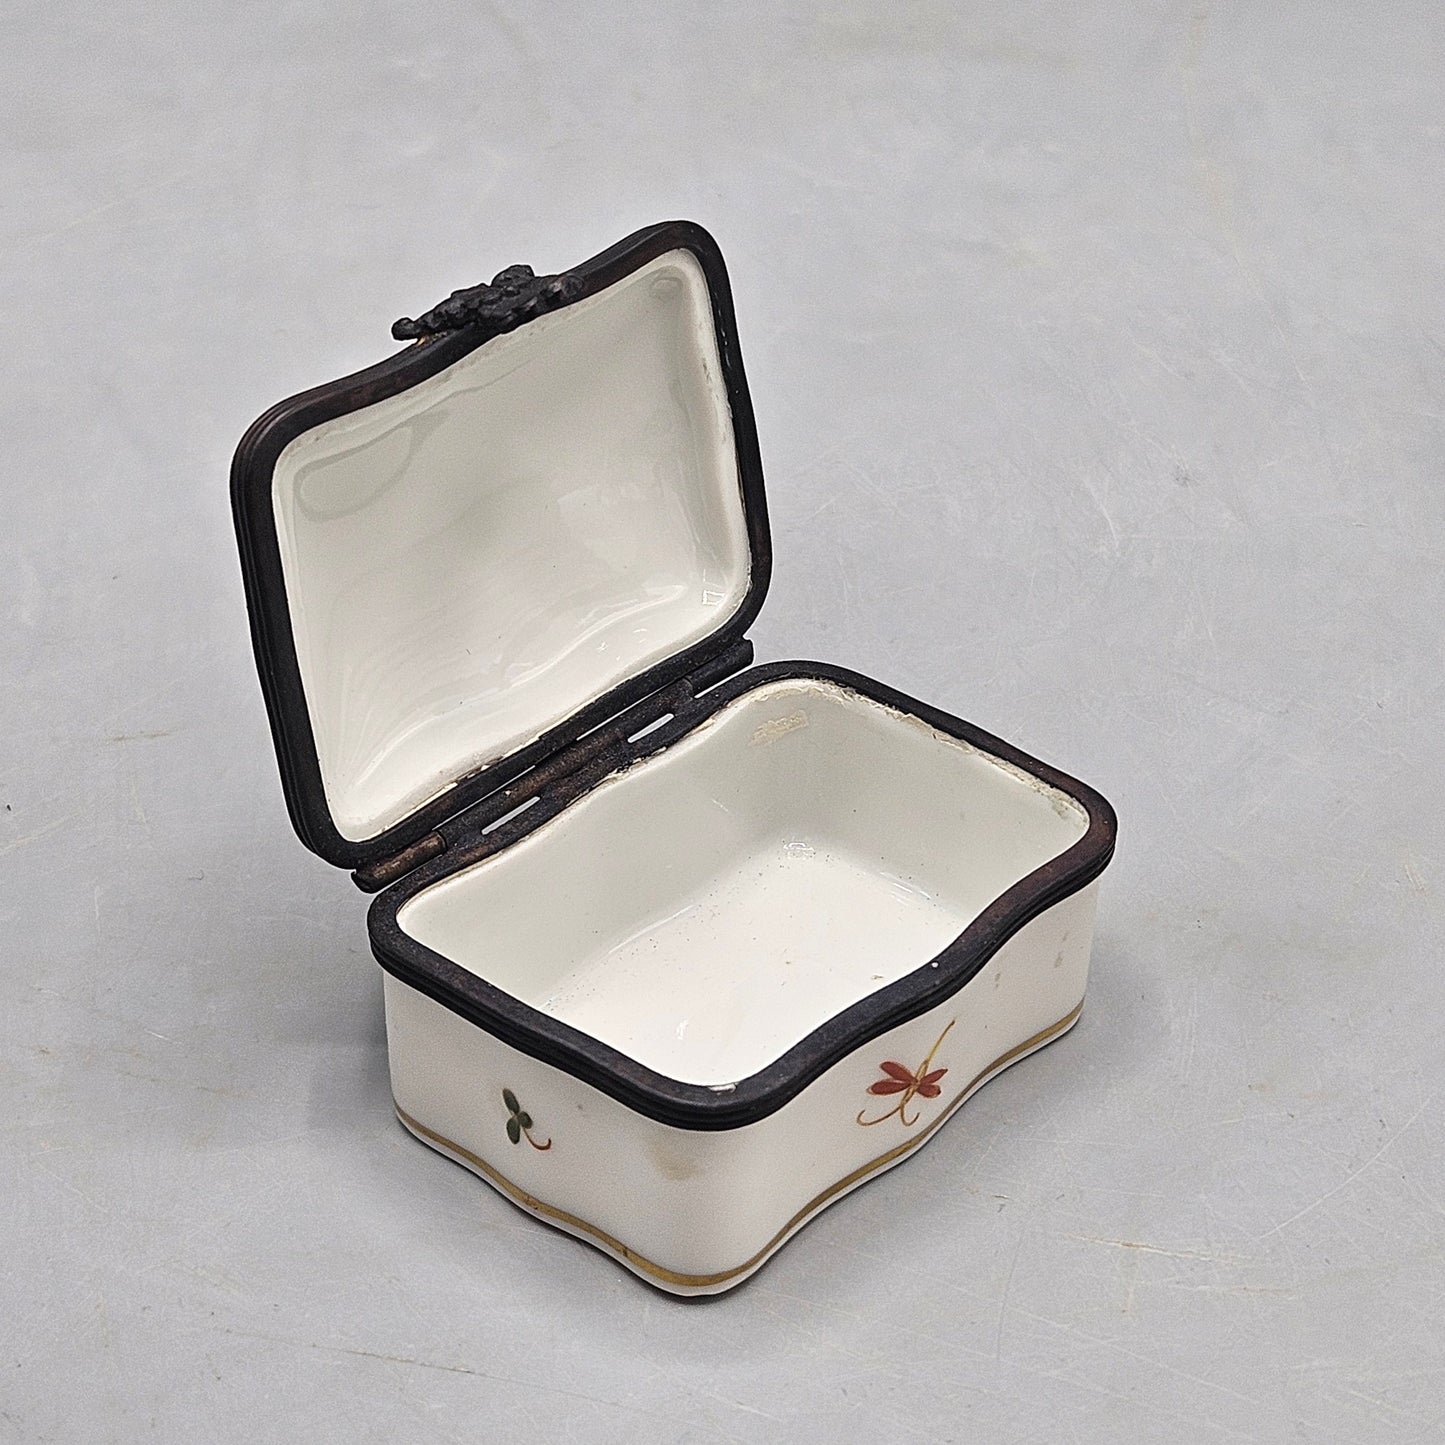 Wonderful Porcelain Trinket Box with Bird From Bermuda